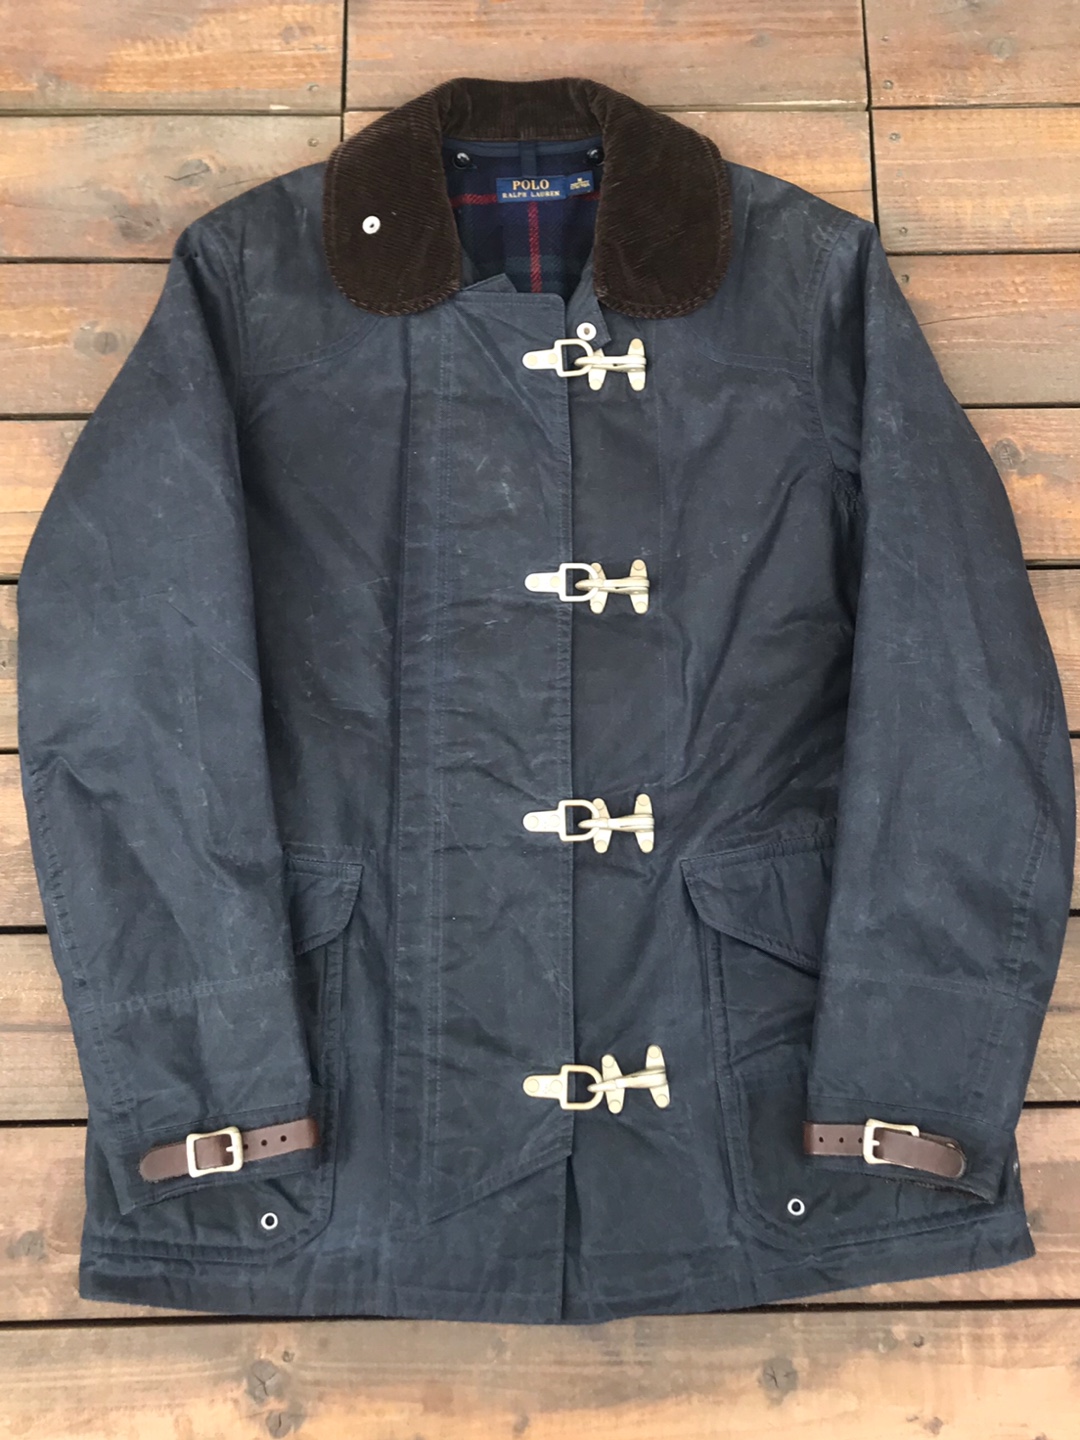 Polo RL plaid lining waxed cotton fireman coat (M size, ~105 추천)